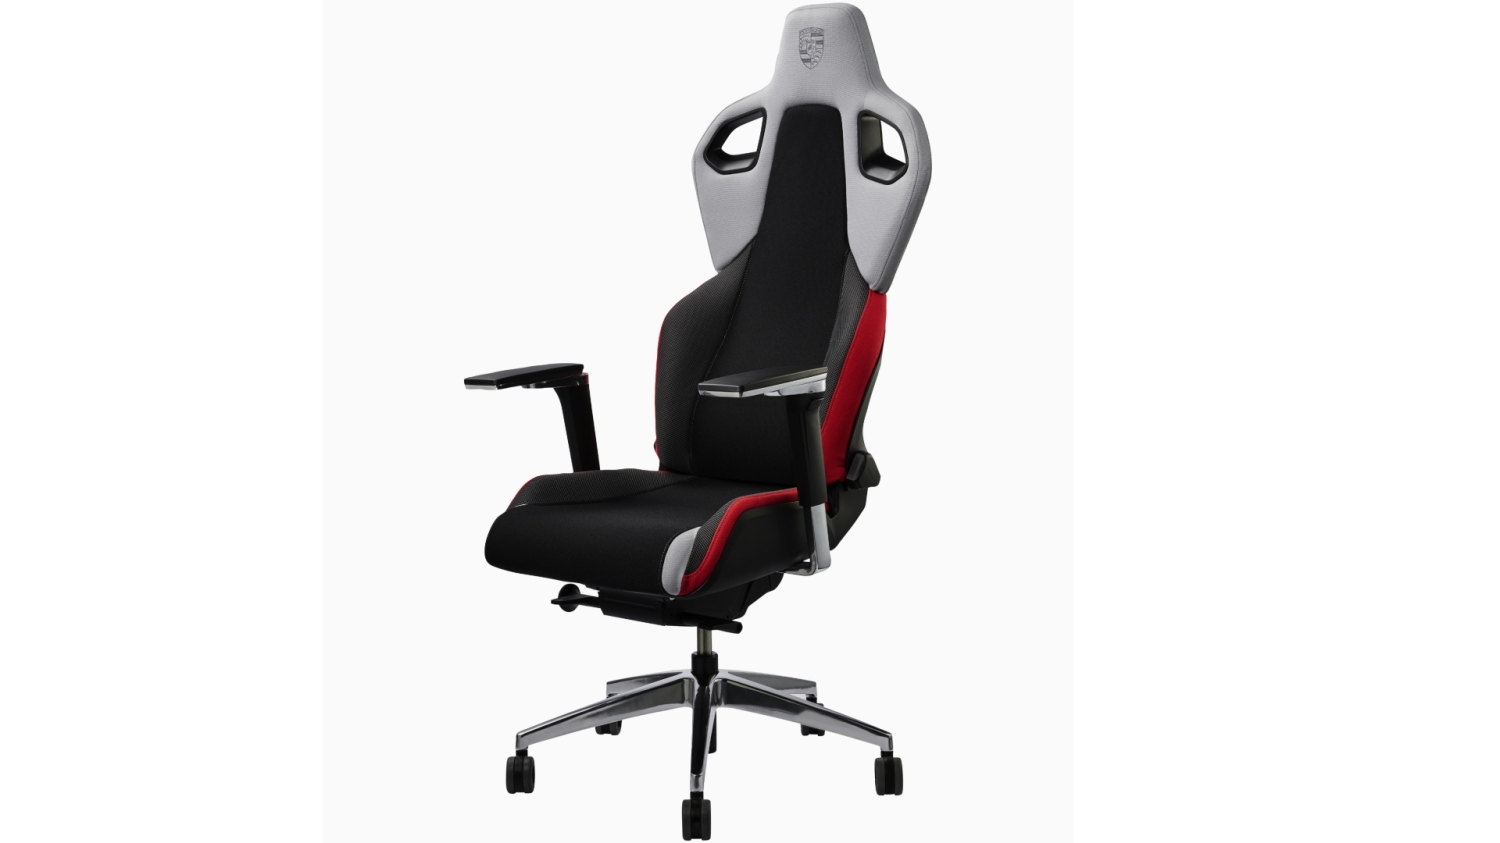 TweakTown Enlarged Image - RECARO × Porsche Gaming Chair Limited Edition